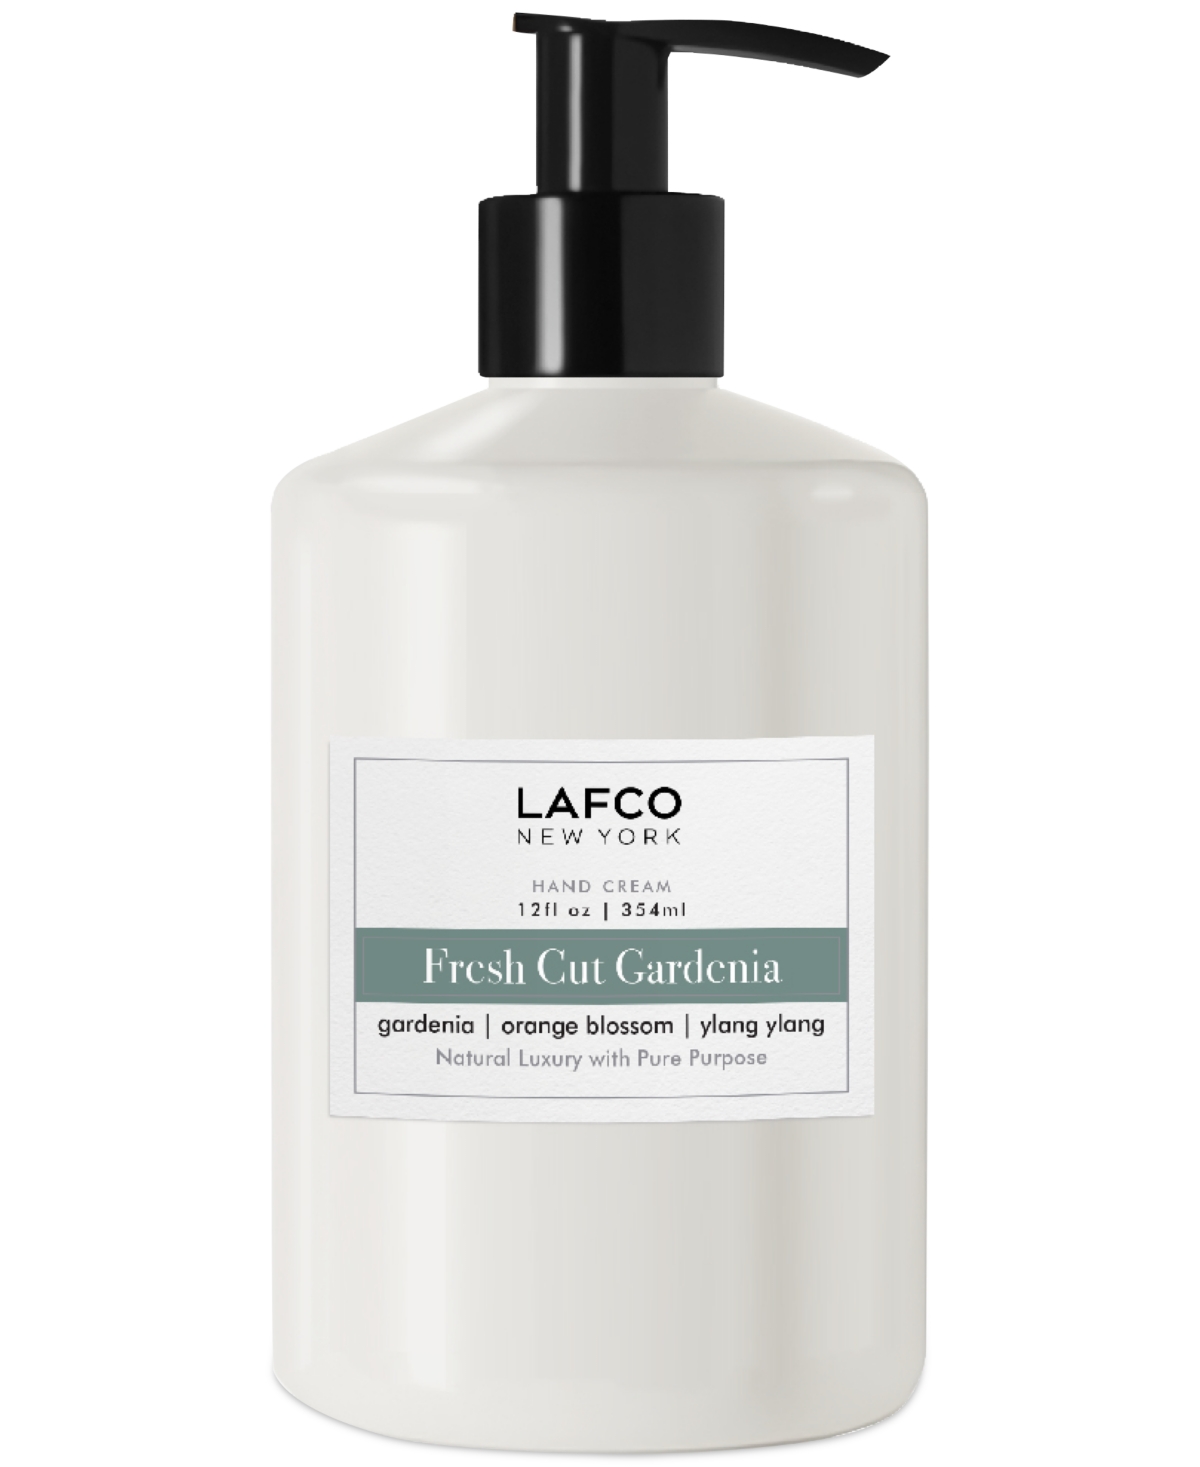 Lafco New York Fresh Cut Gardenia Hand Cream, 12 oz.